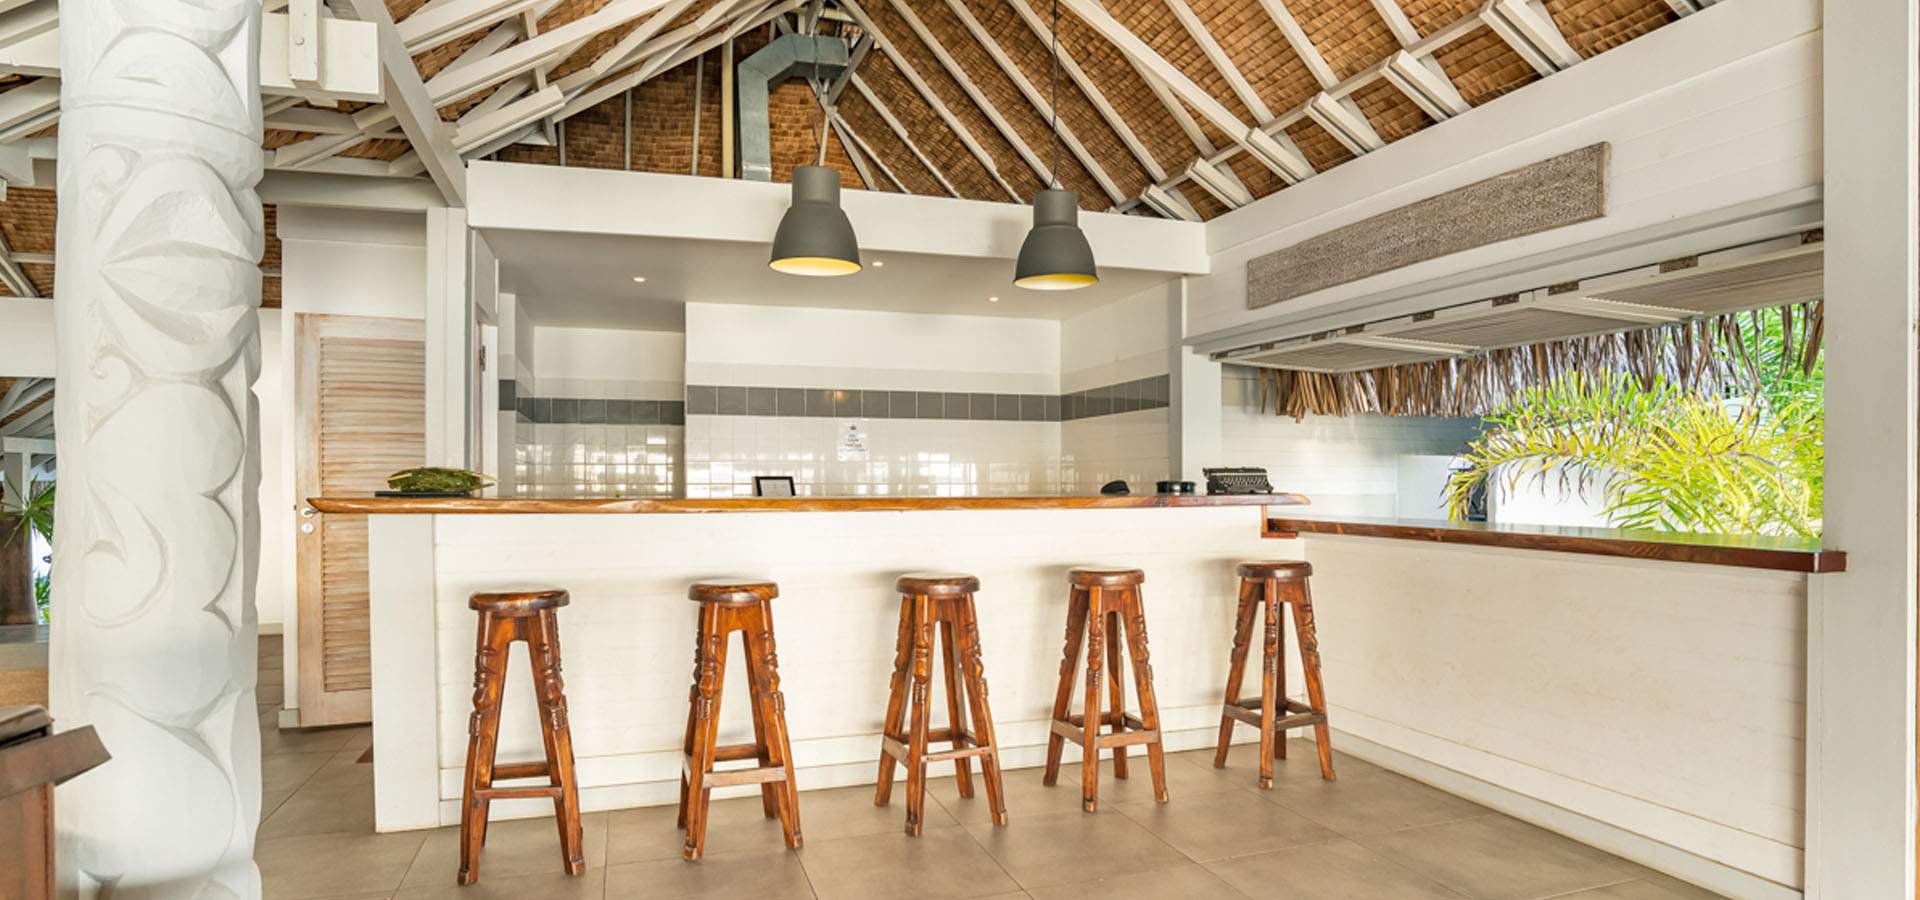 Moorea Island Beach Hotel bar kitchen